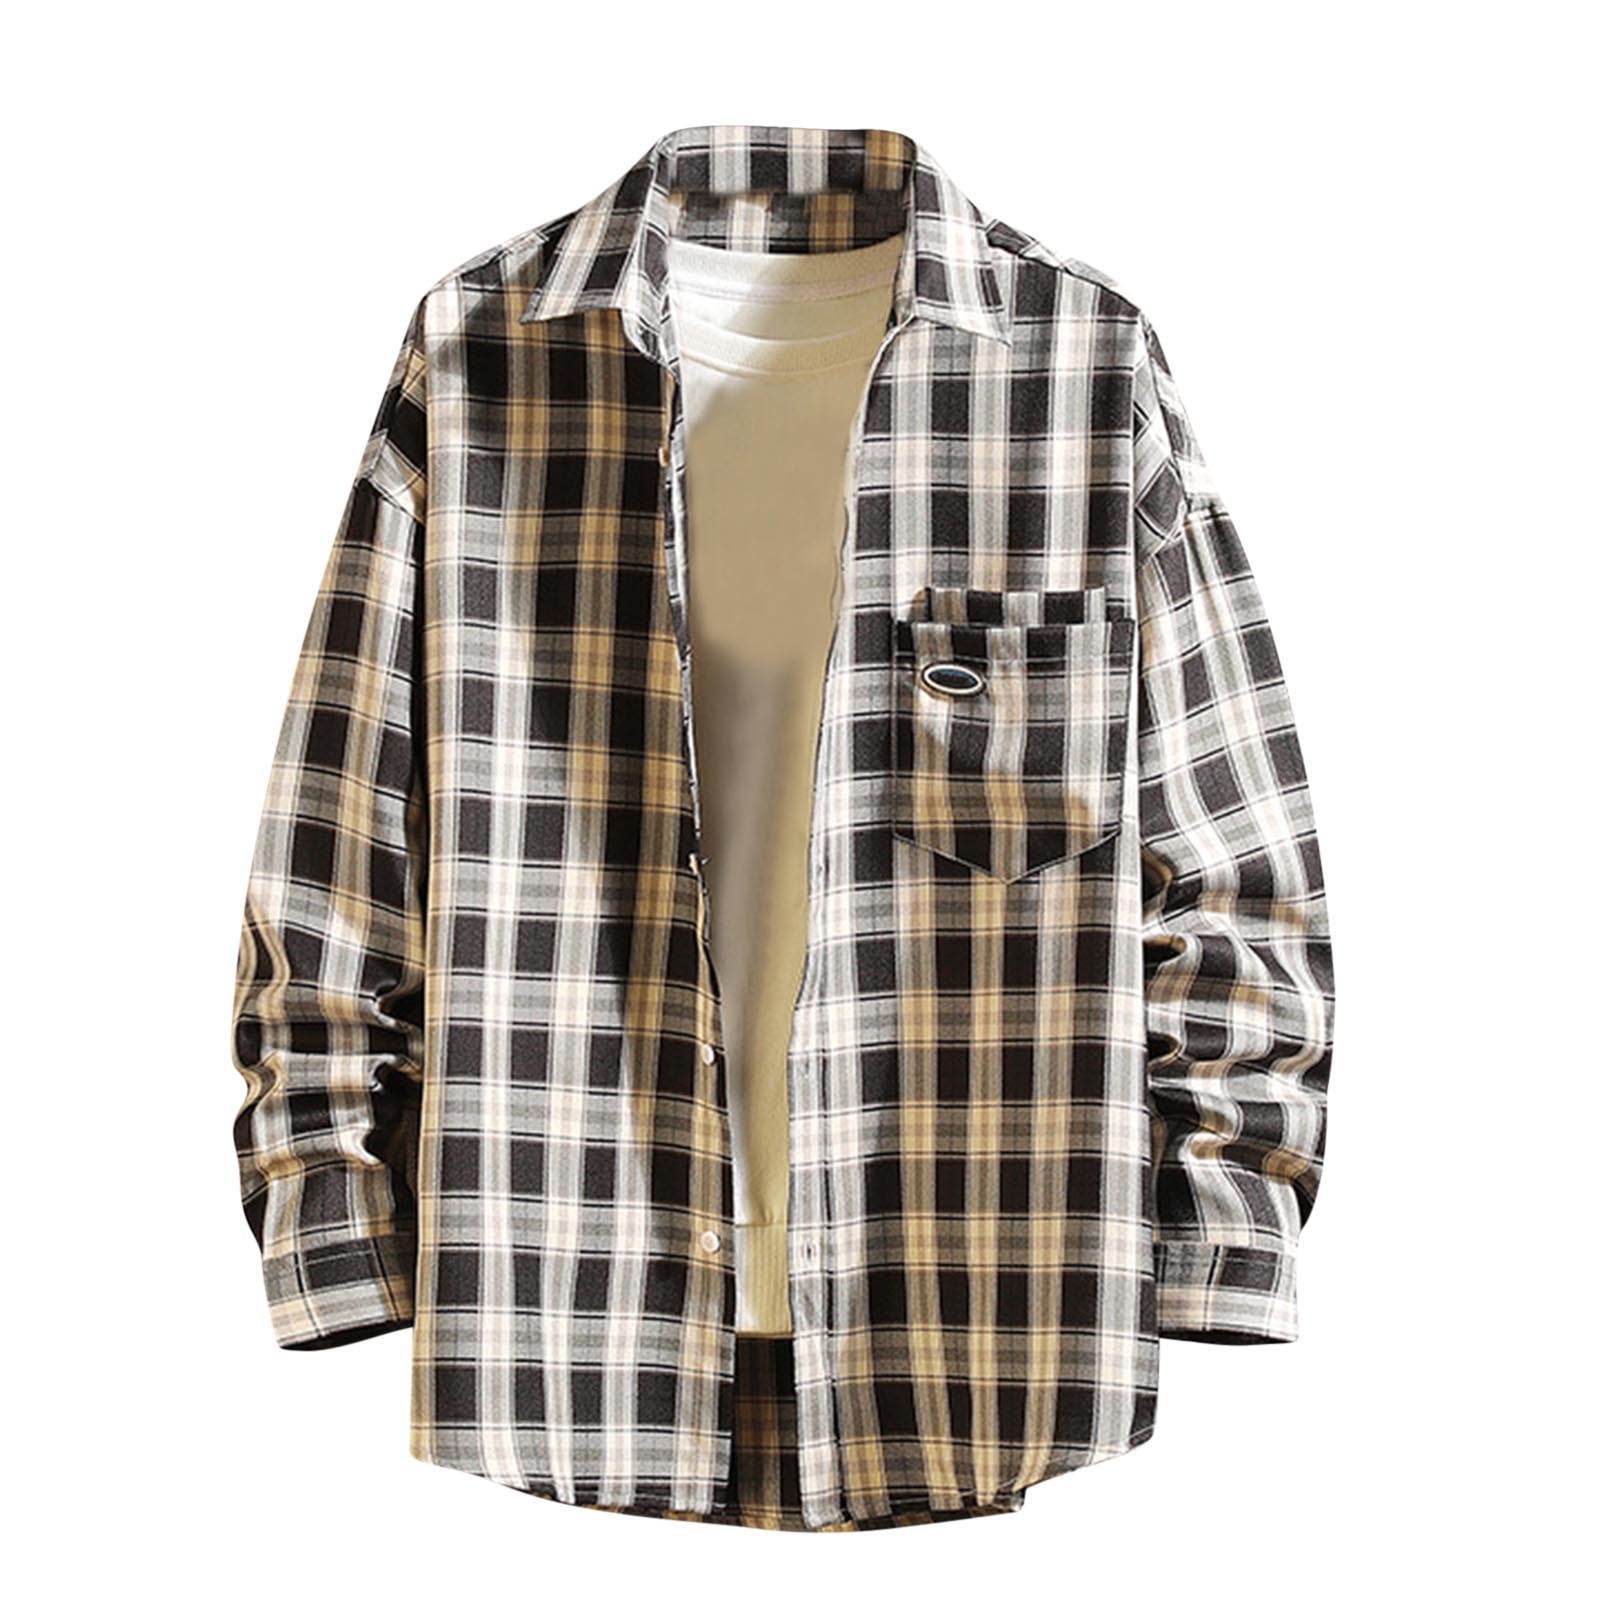 XFLWAM Plaid Button Down Shirts for Men Flannel Shirt Regular Fit Long ...